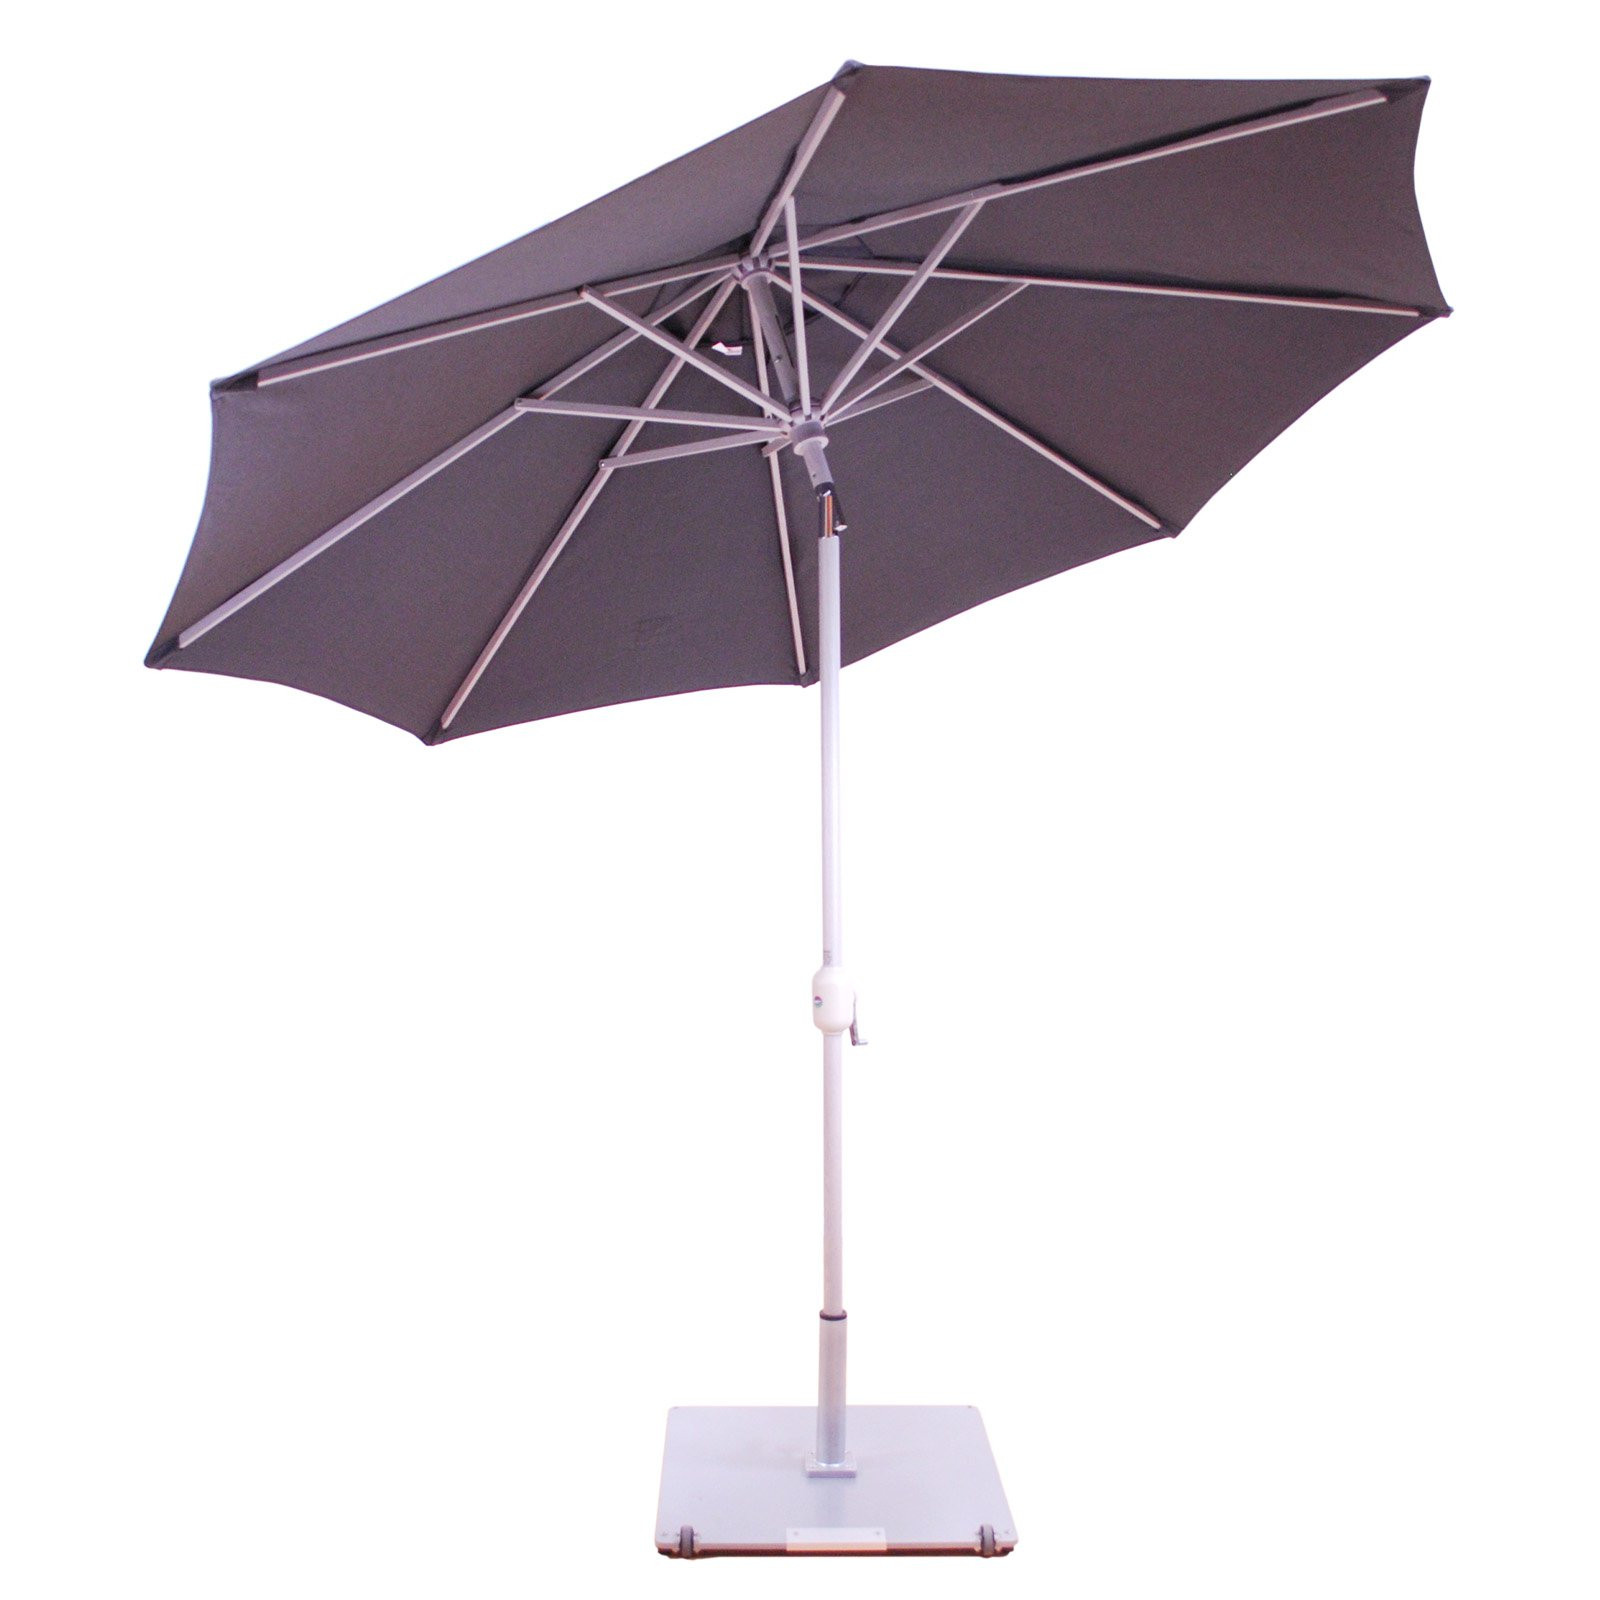 Best ideas about Sunbrella Patio Umbrellas
. Save or Pin Galtech 9 ft Sunbrella Aluminum Patio Umbrella with Auto Now.